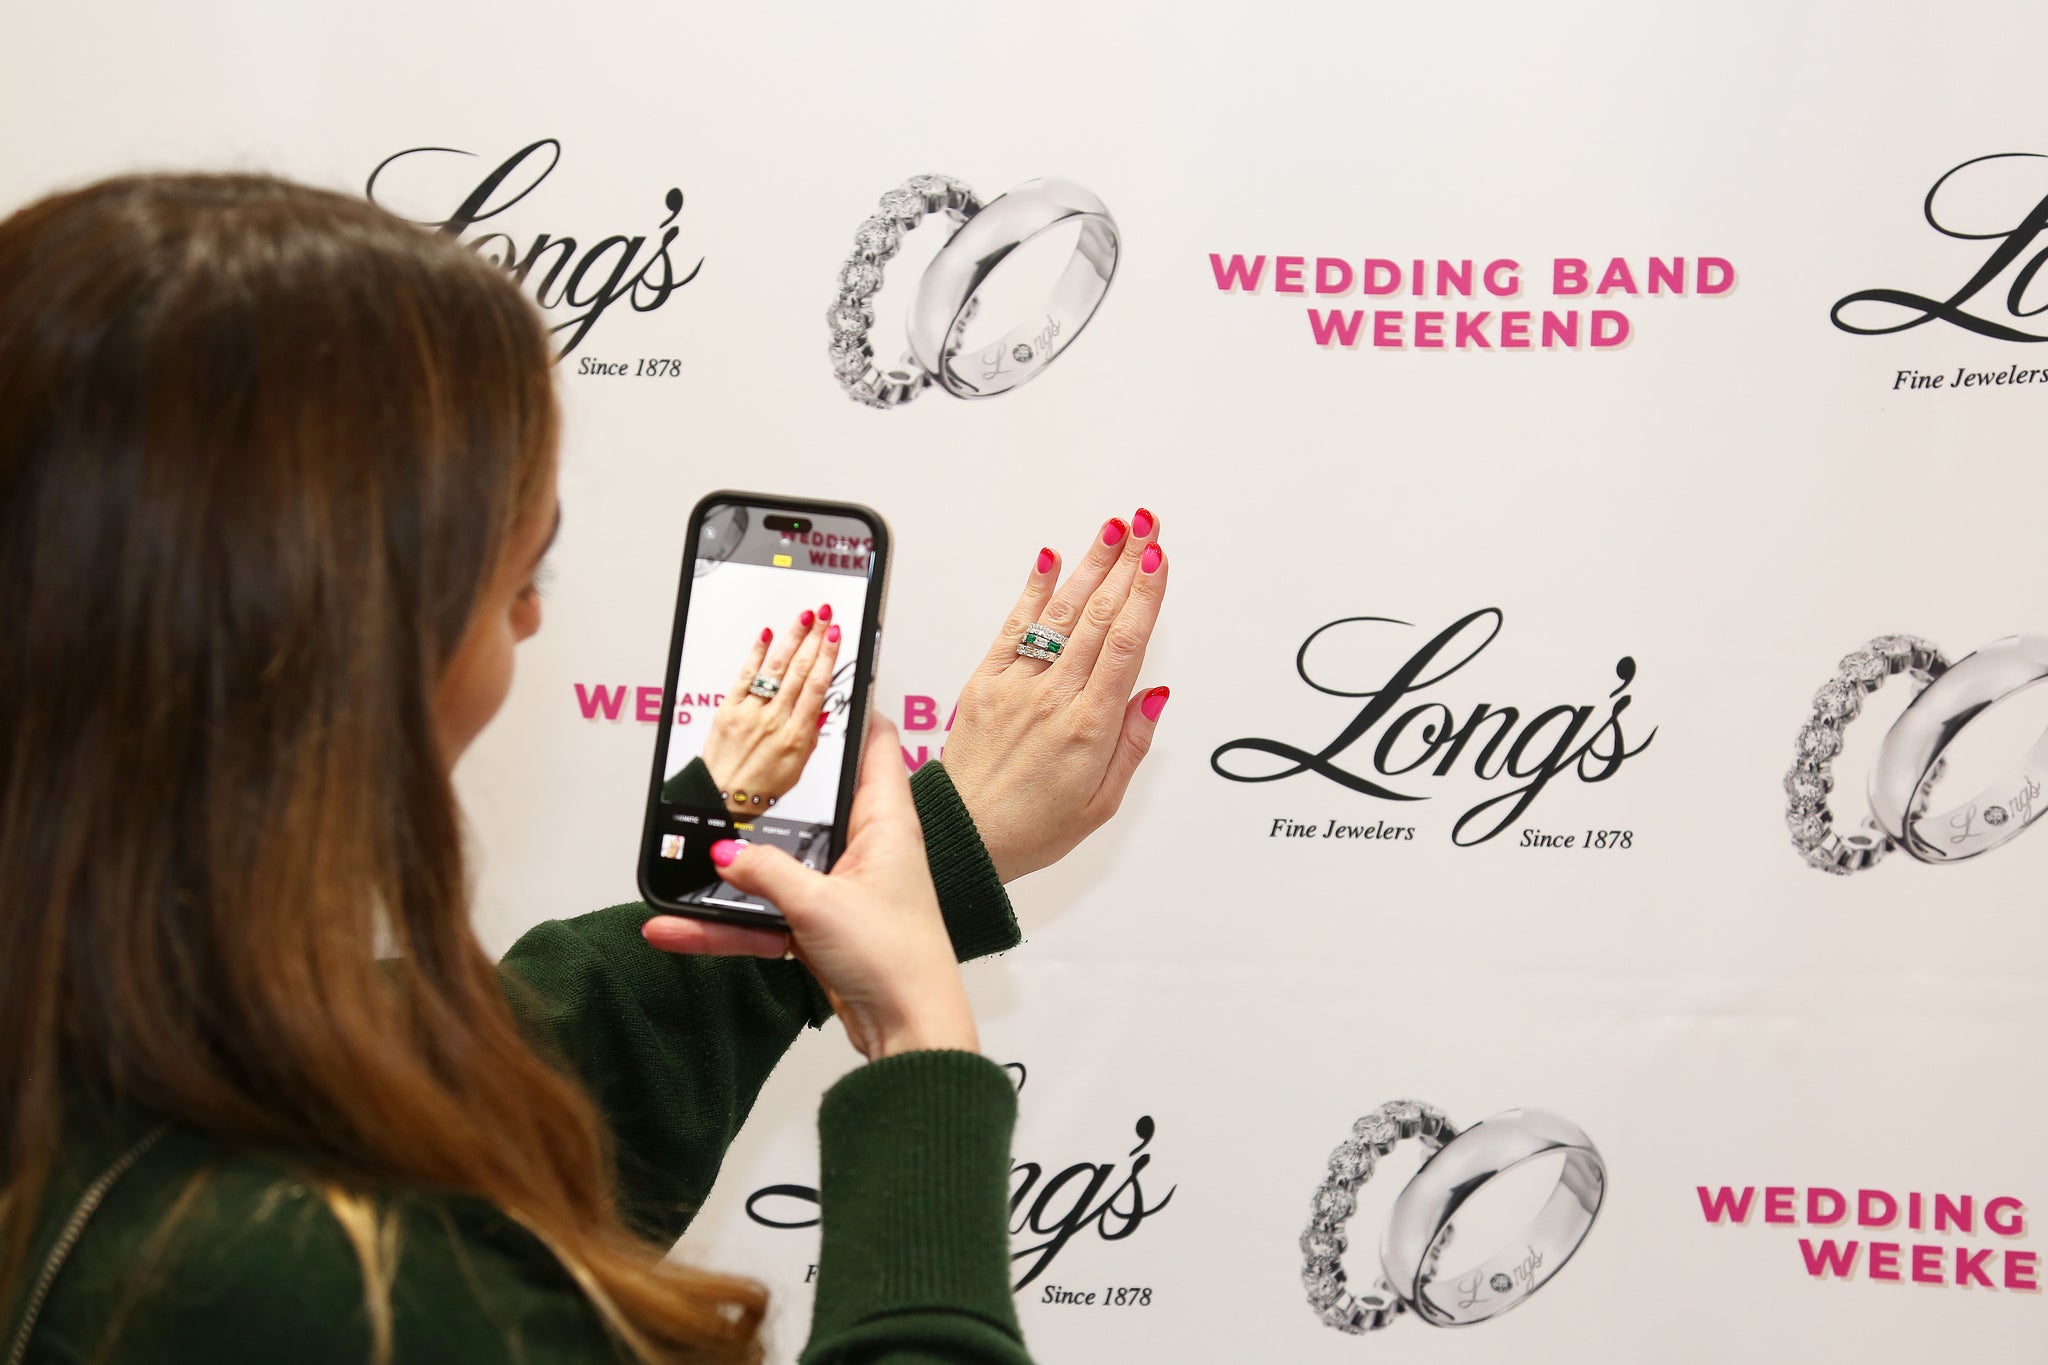 Press Release: Long's Jewelers Brings Back Wedding Band Weekend